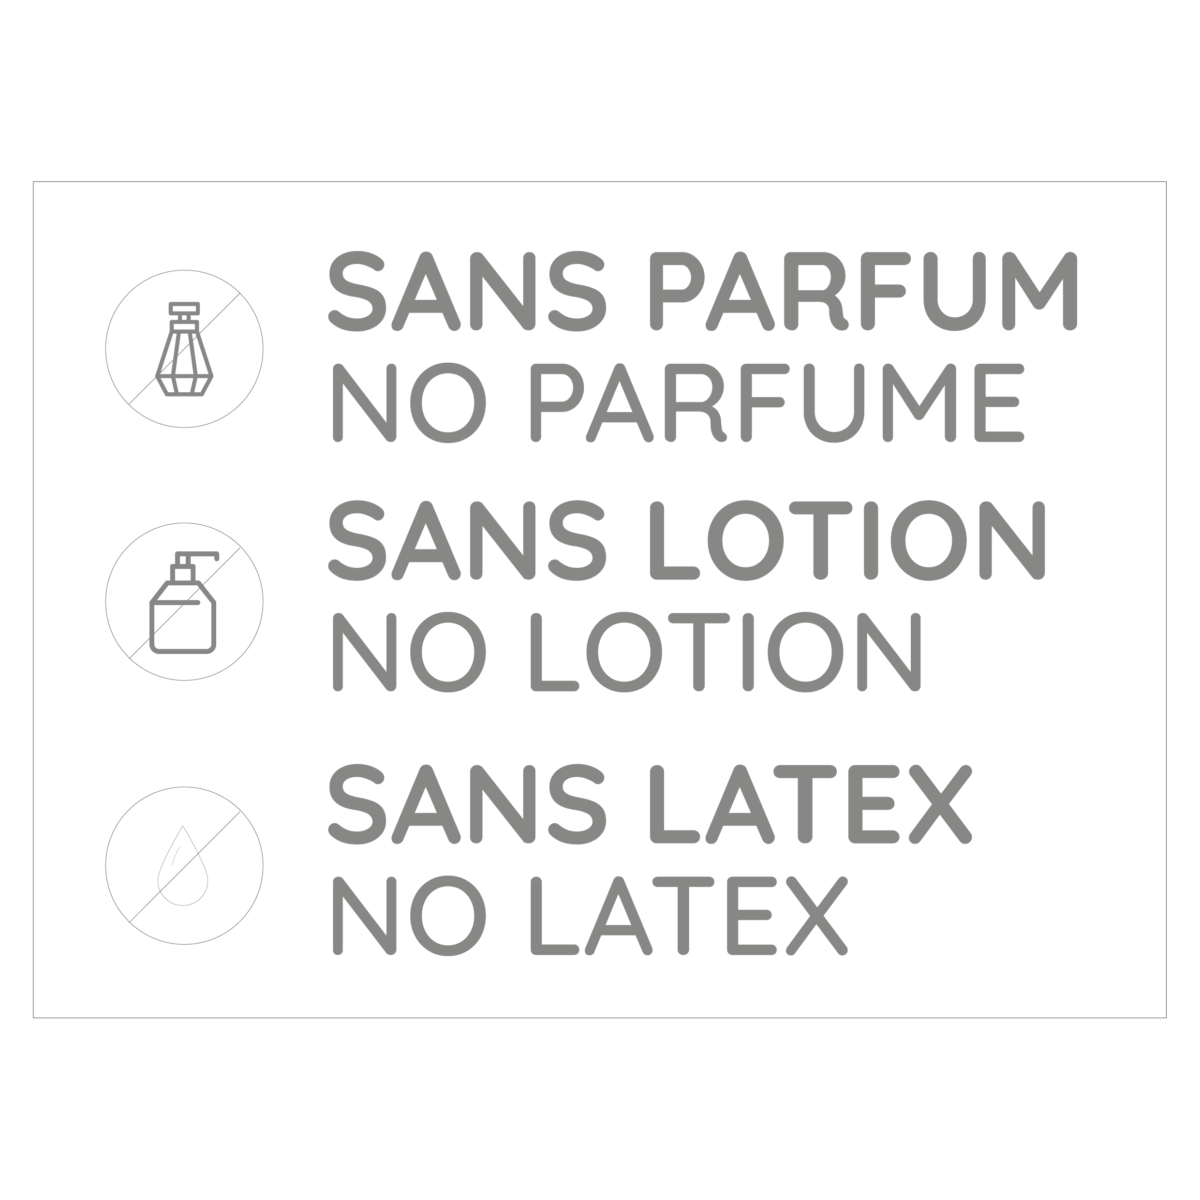 Sans parfum lotion latex